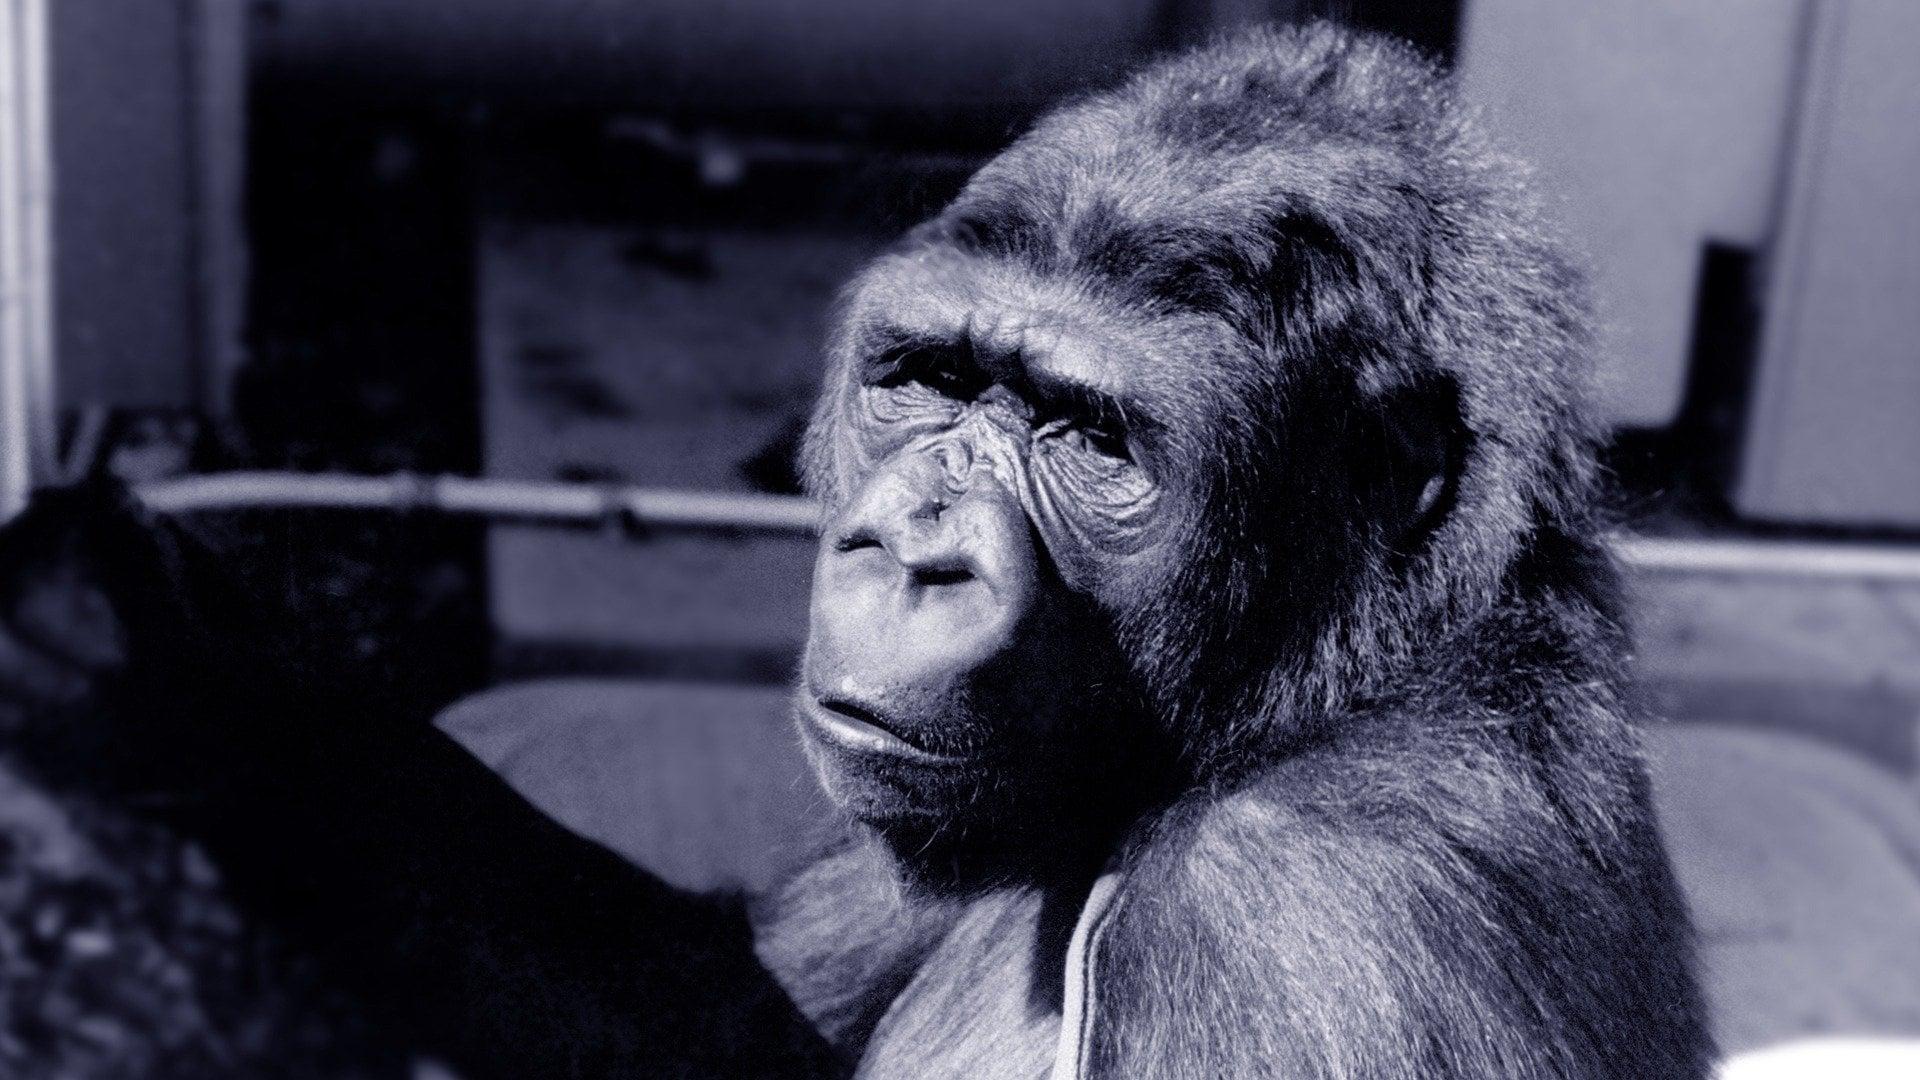 Koko: A Talking Gorilla backdrop